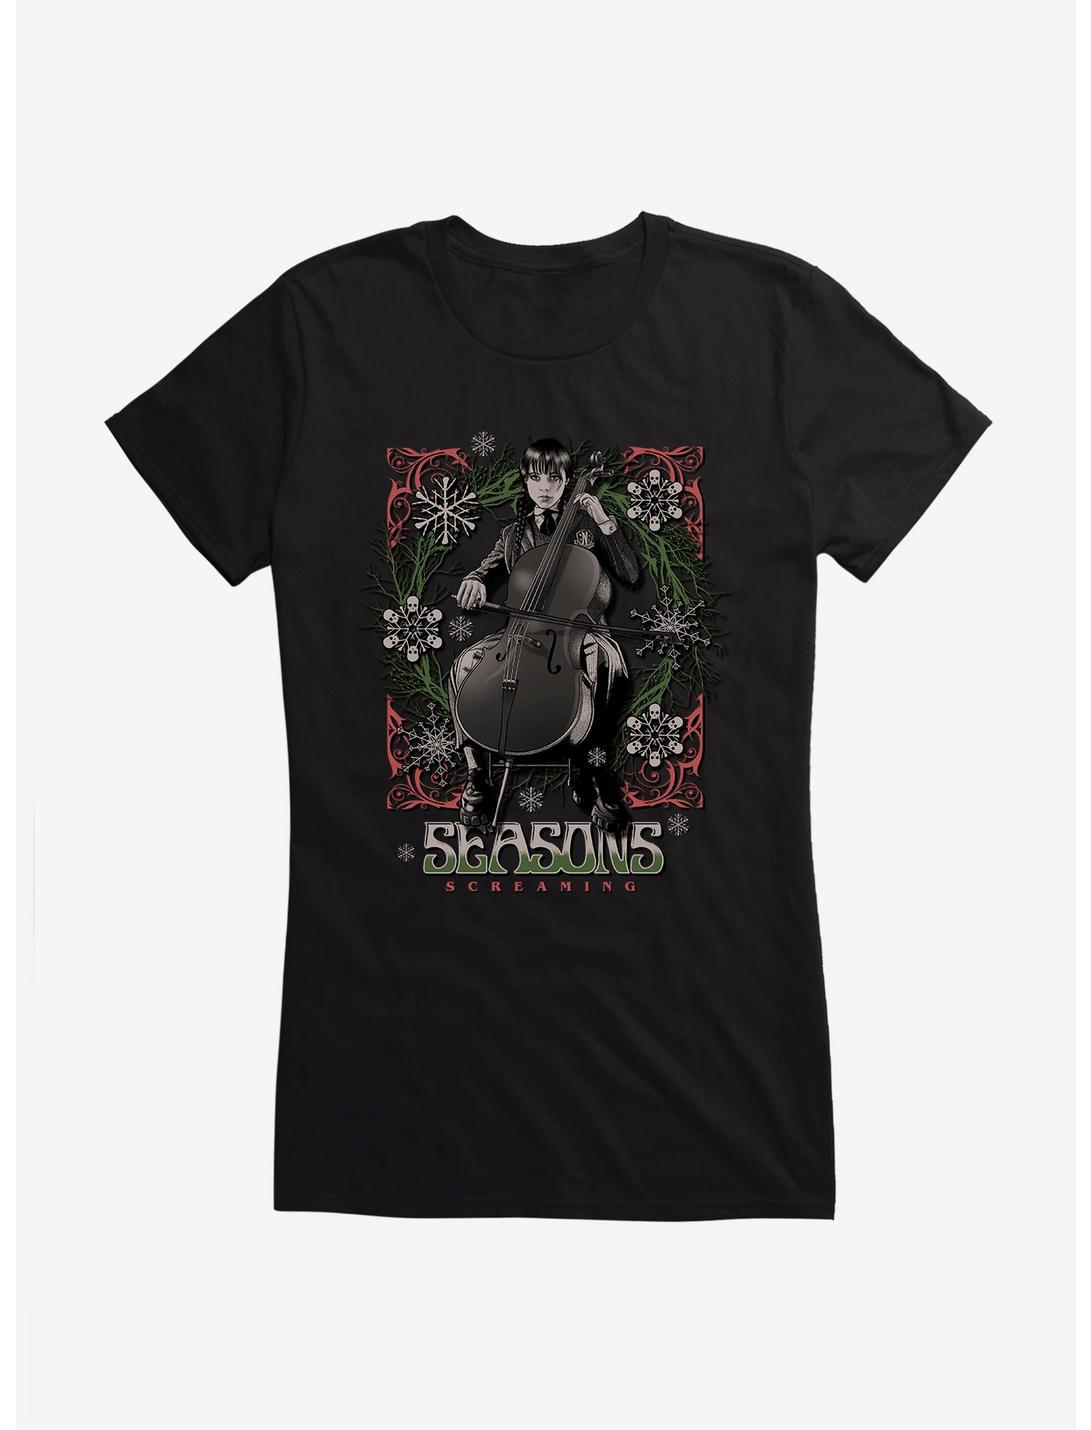 Wednesday Seasons Screaming Girls T-Shirt, BLACK, hi-res